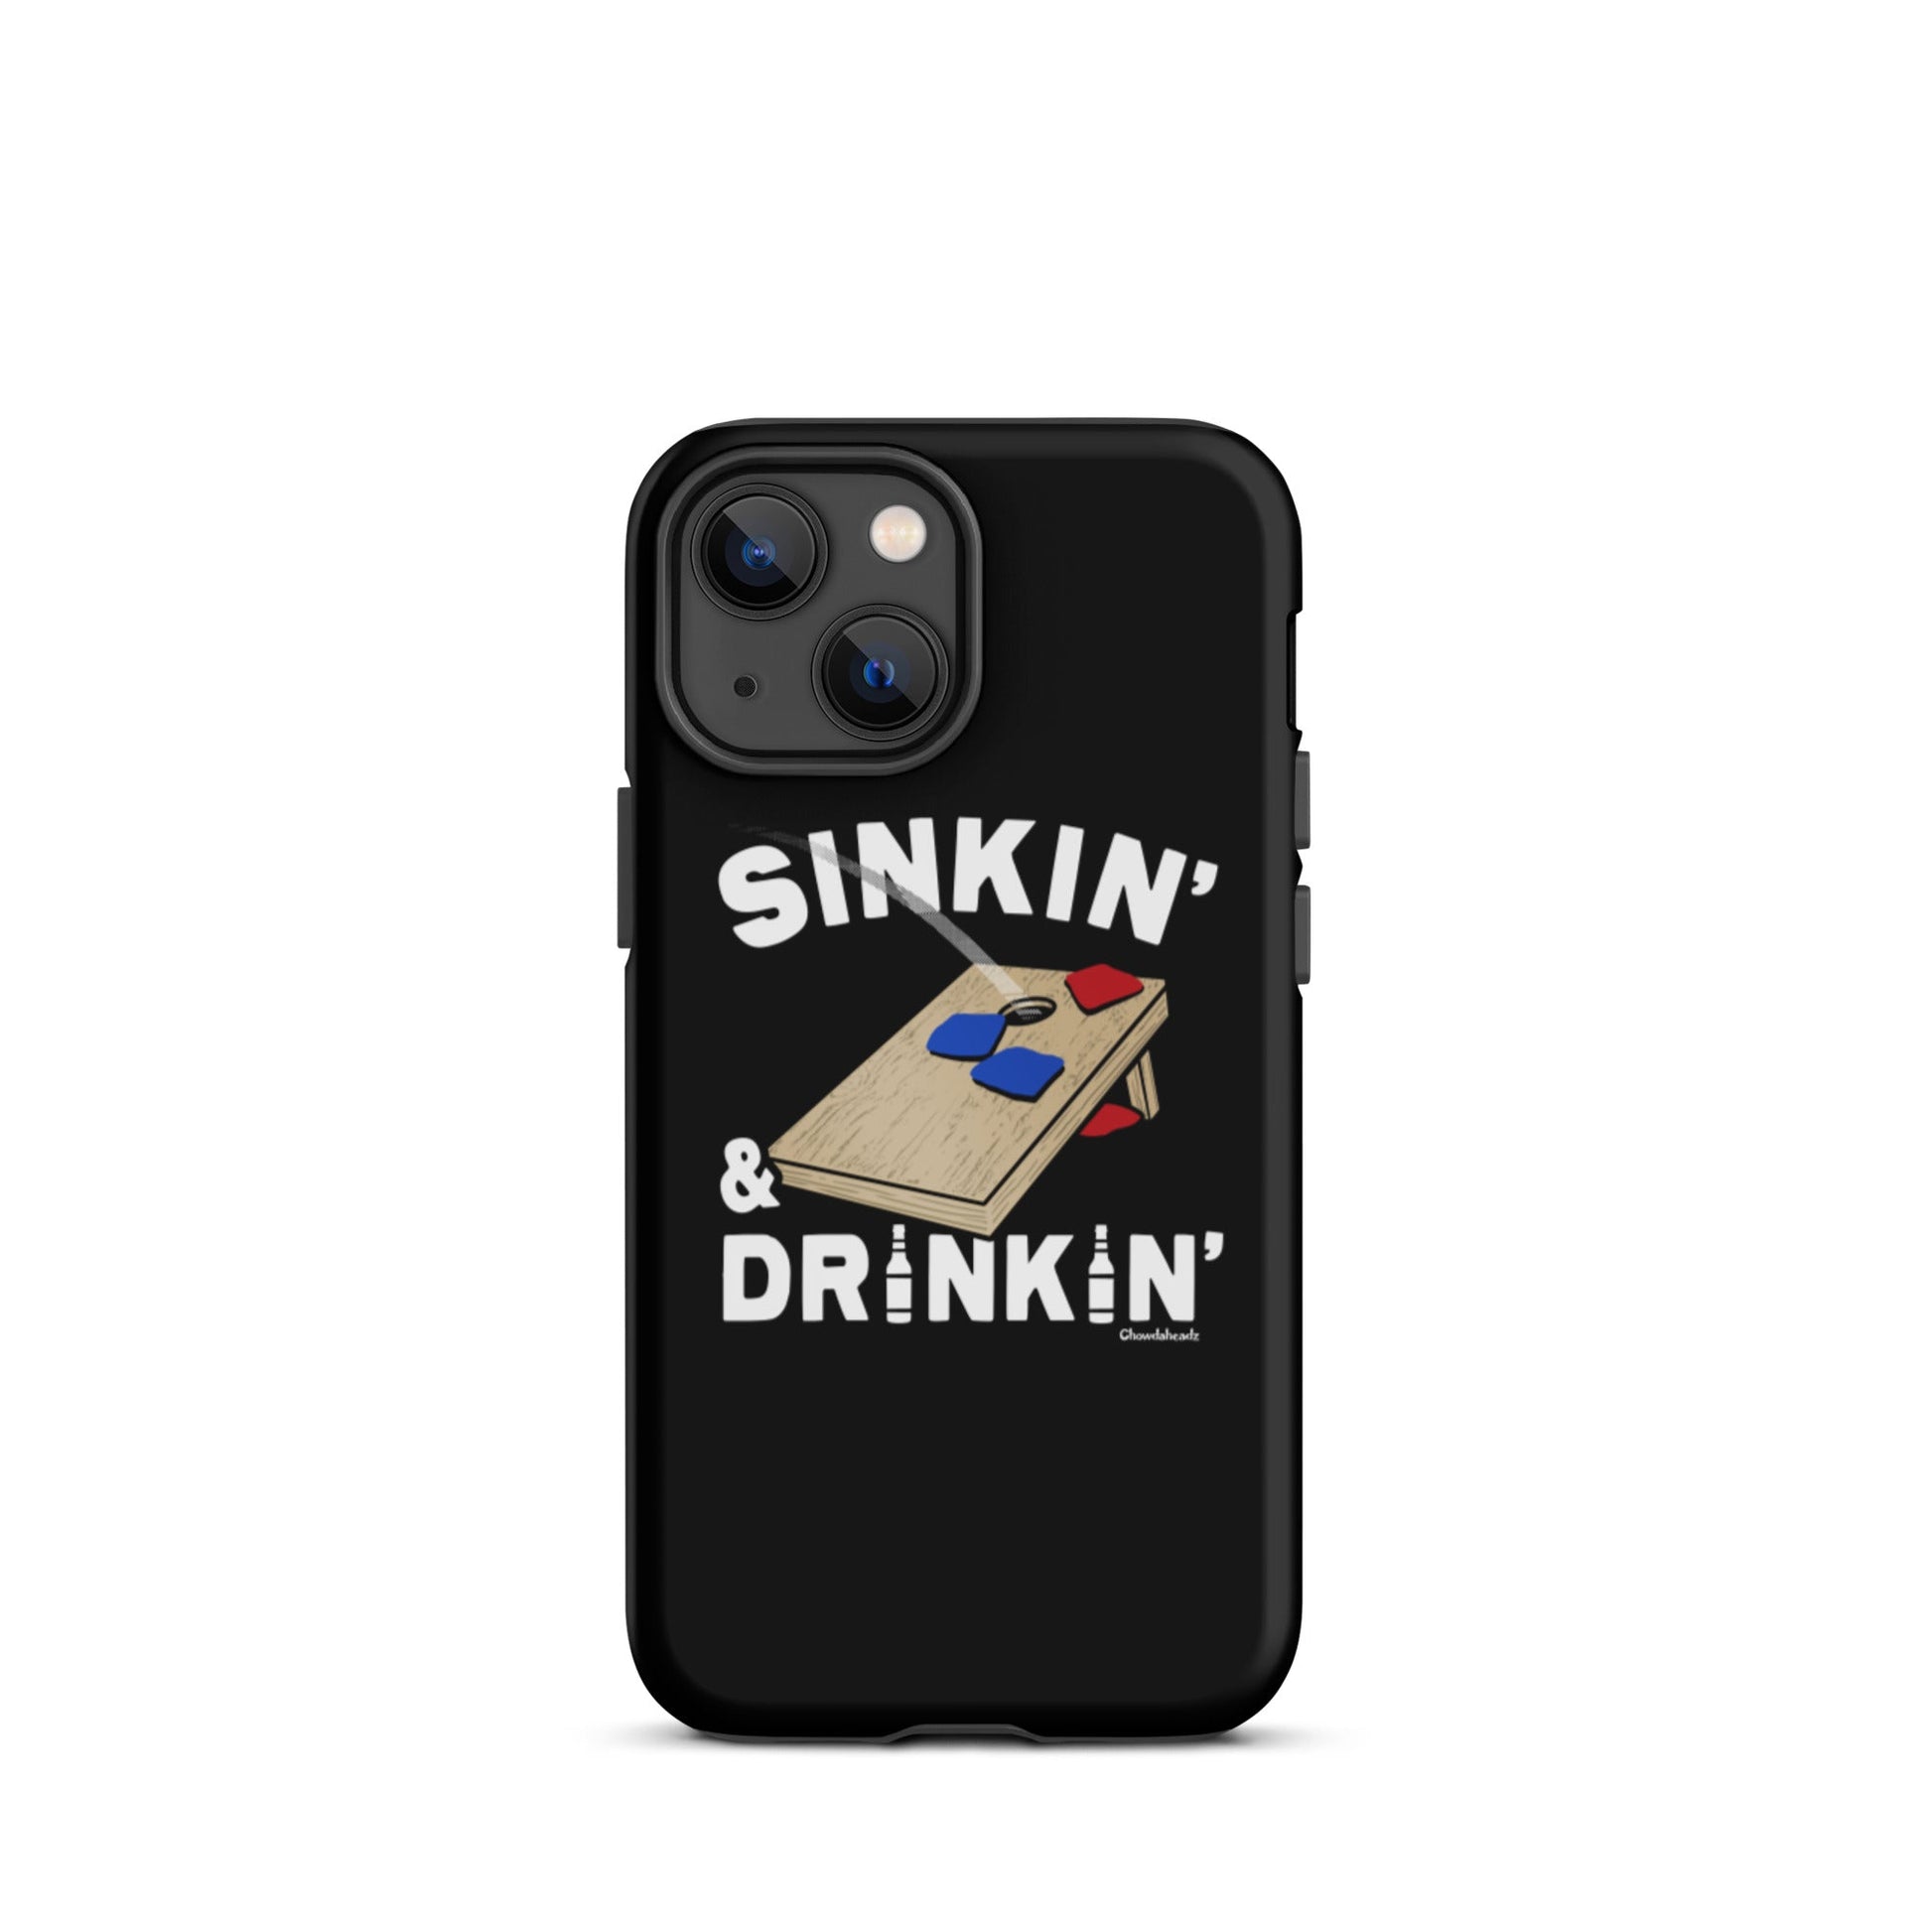 Sinkin' & Drinkin' Tough iPhone case - Chowdaheadz